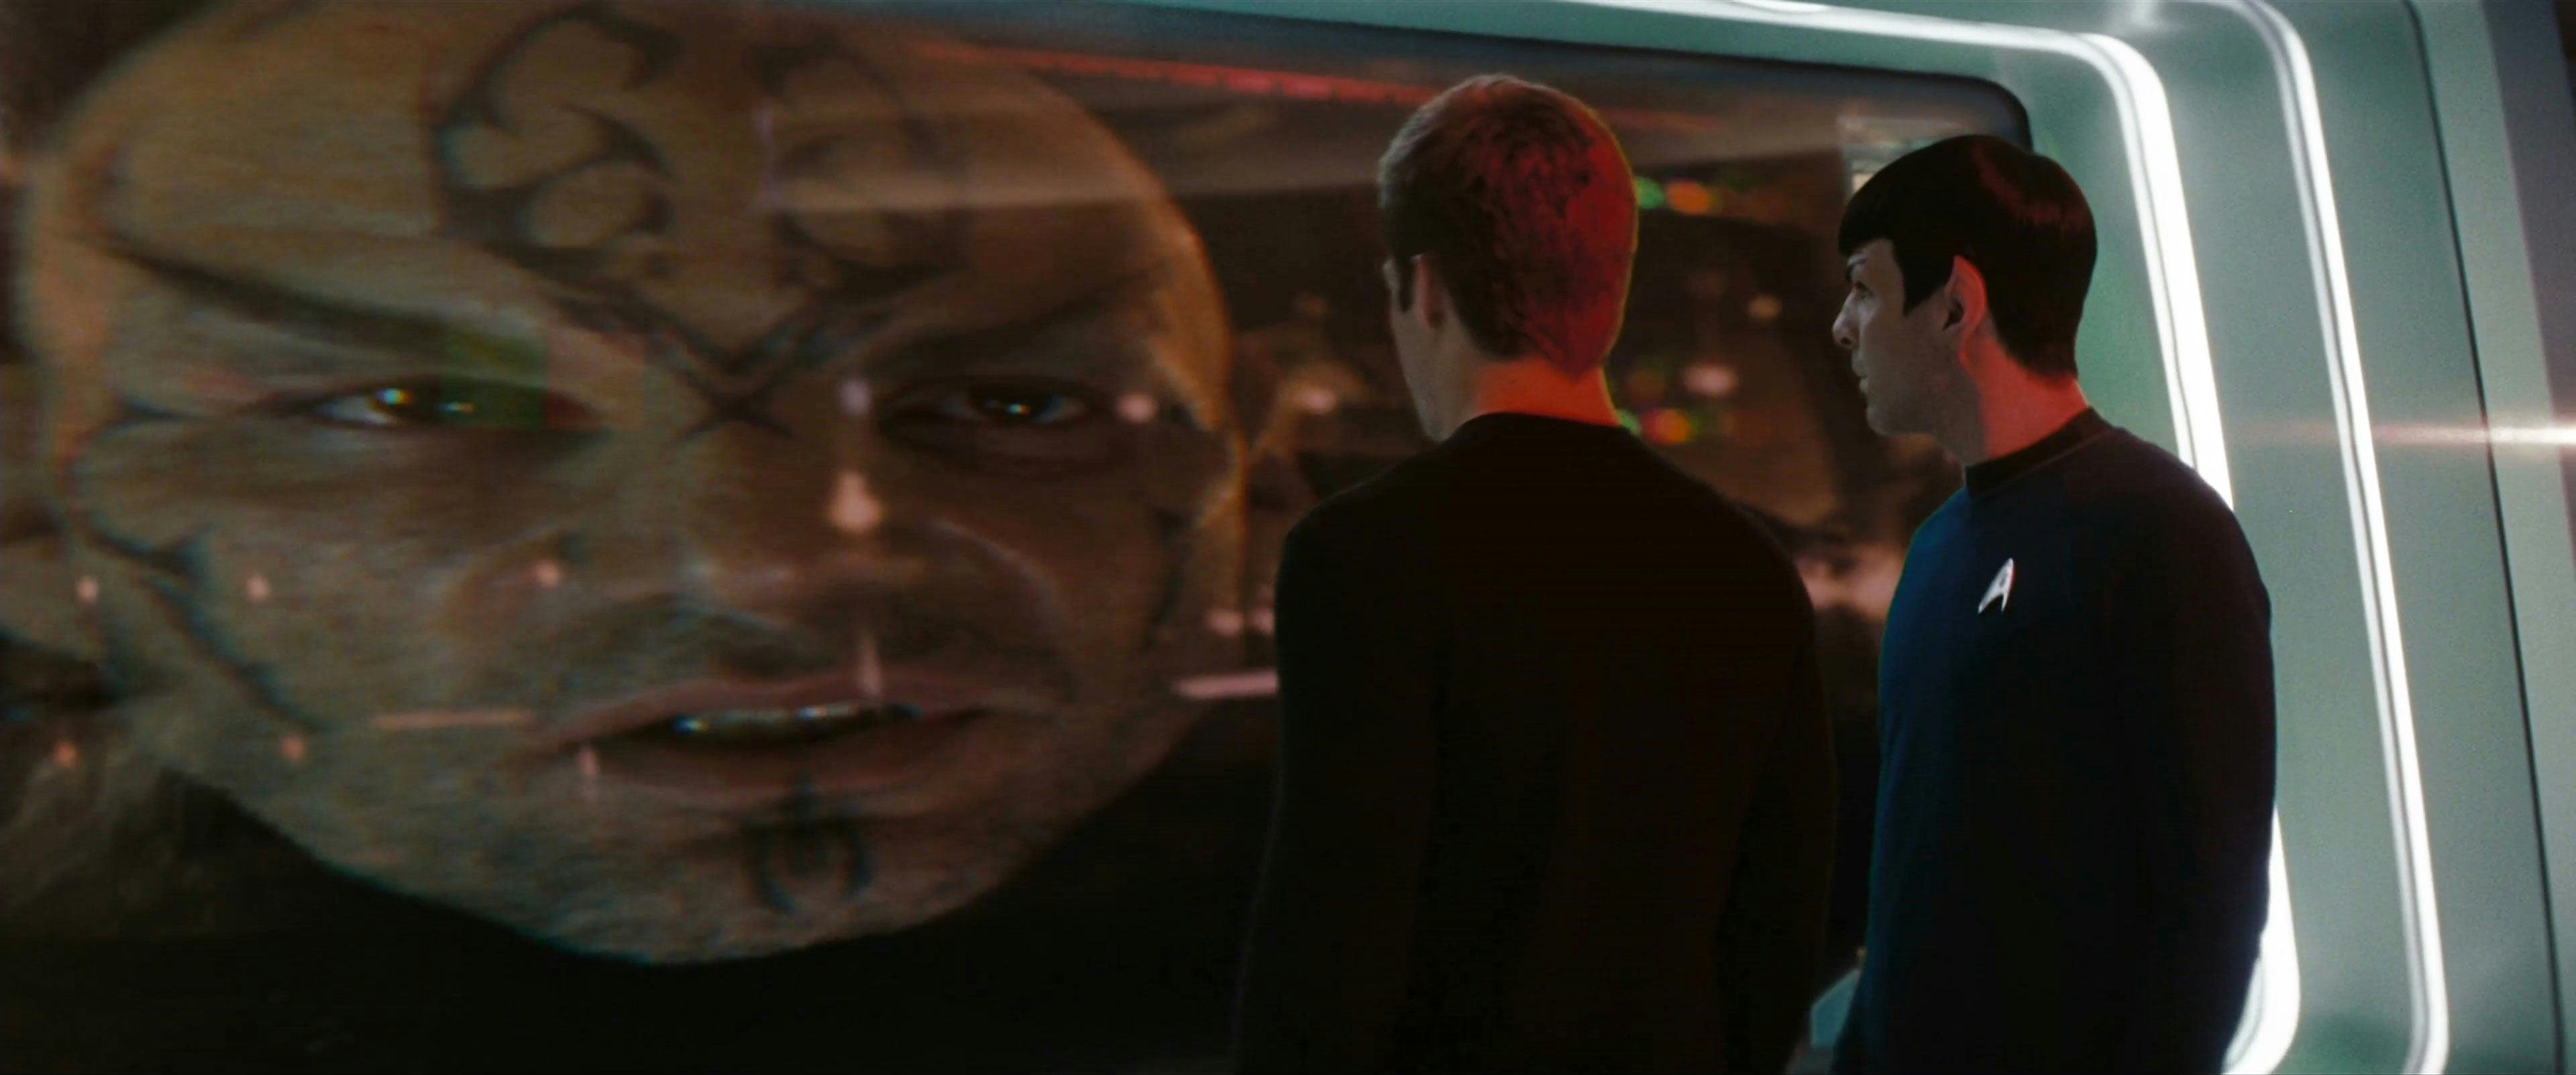 Kirk and Spock of the Kelvin timeline view Nero on the Enterprise's viewscreen in Star Trek (2009)